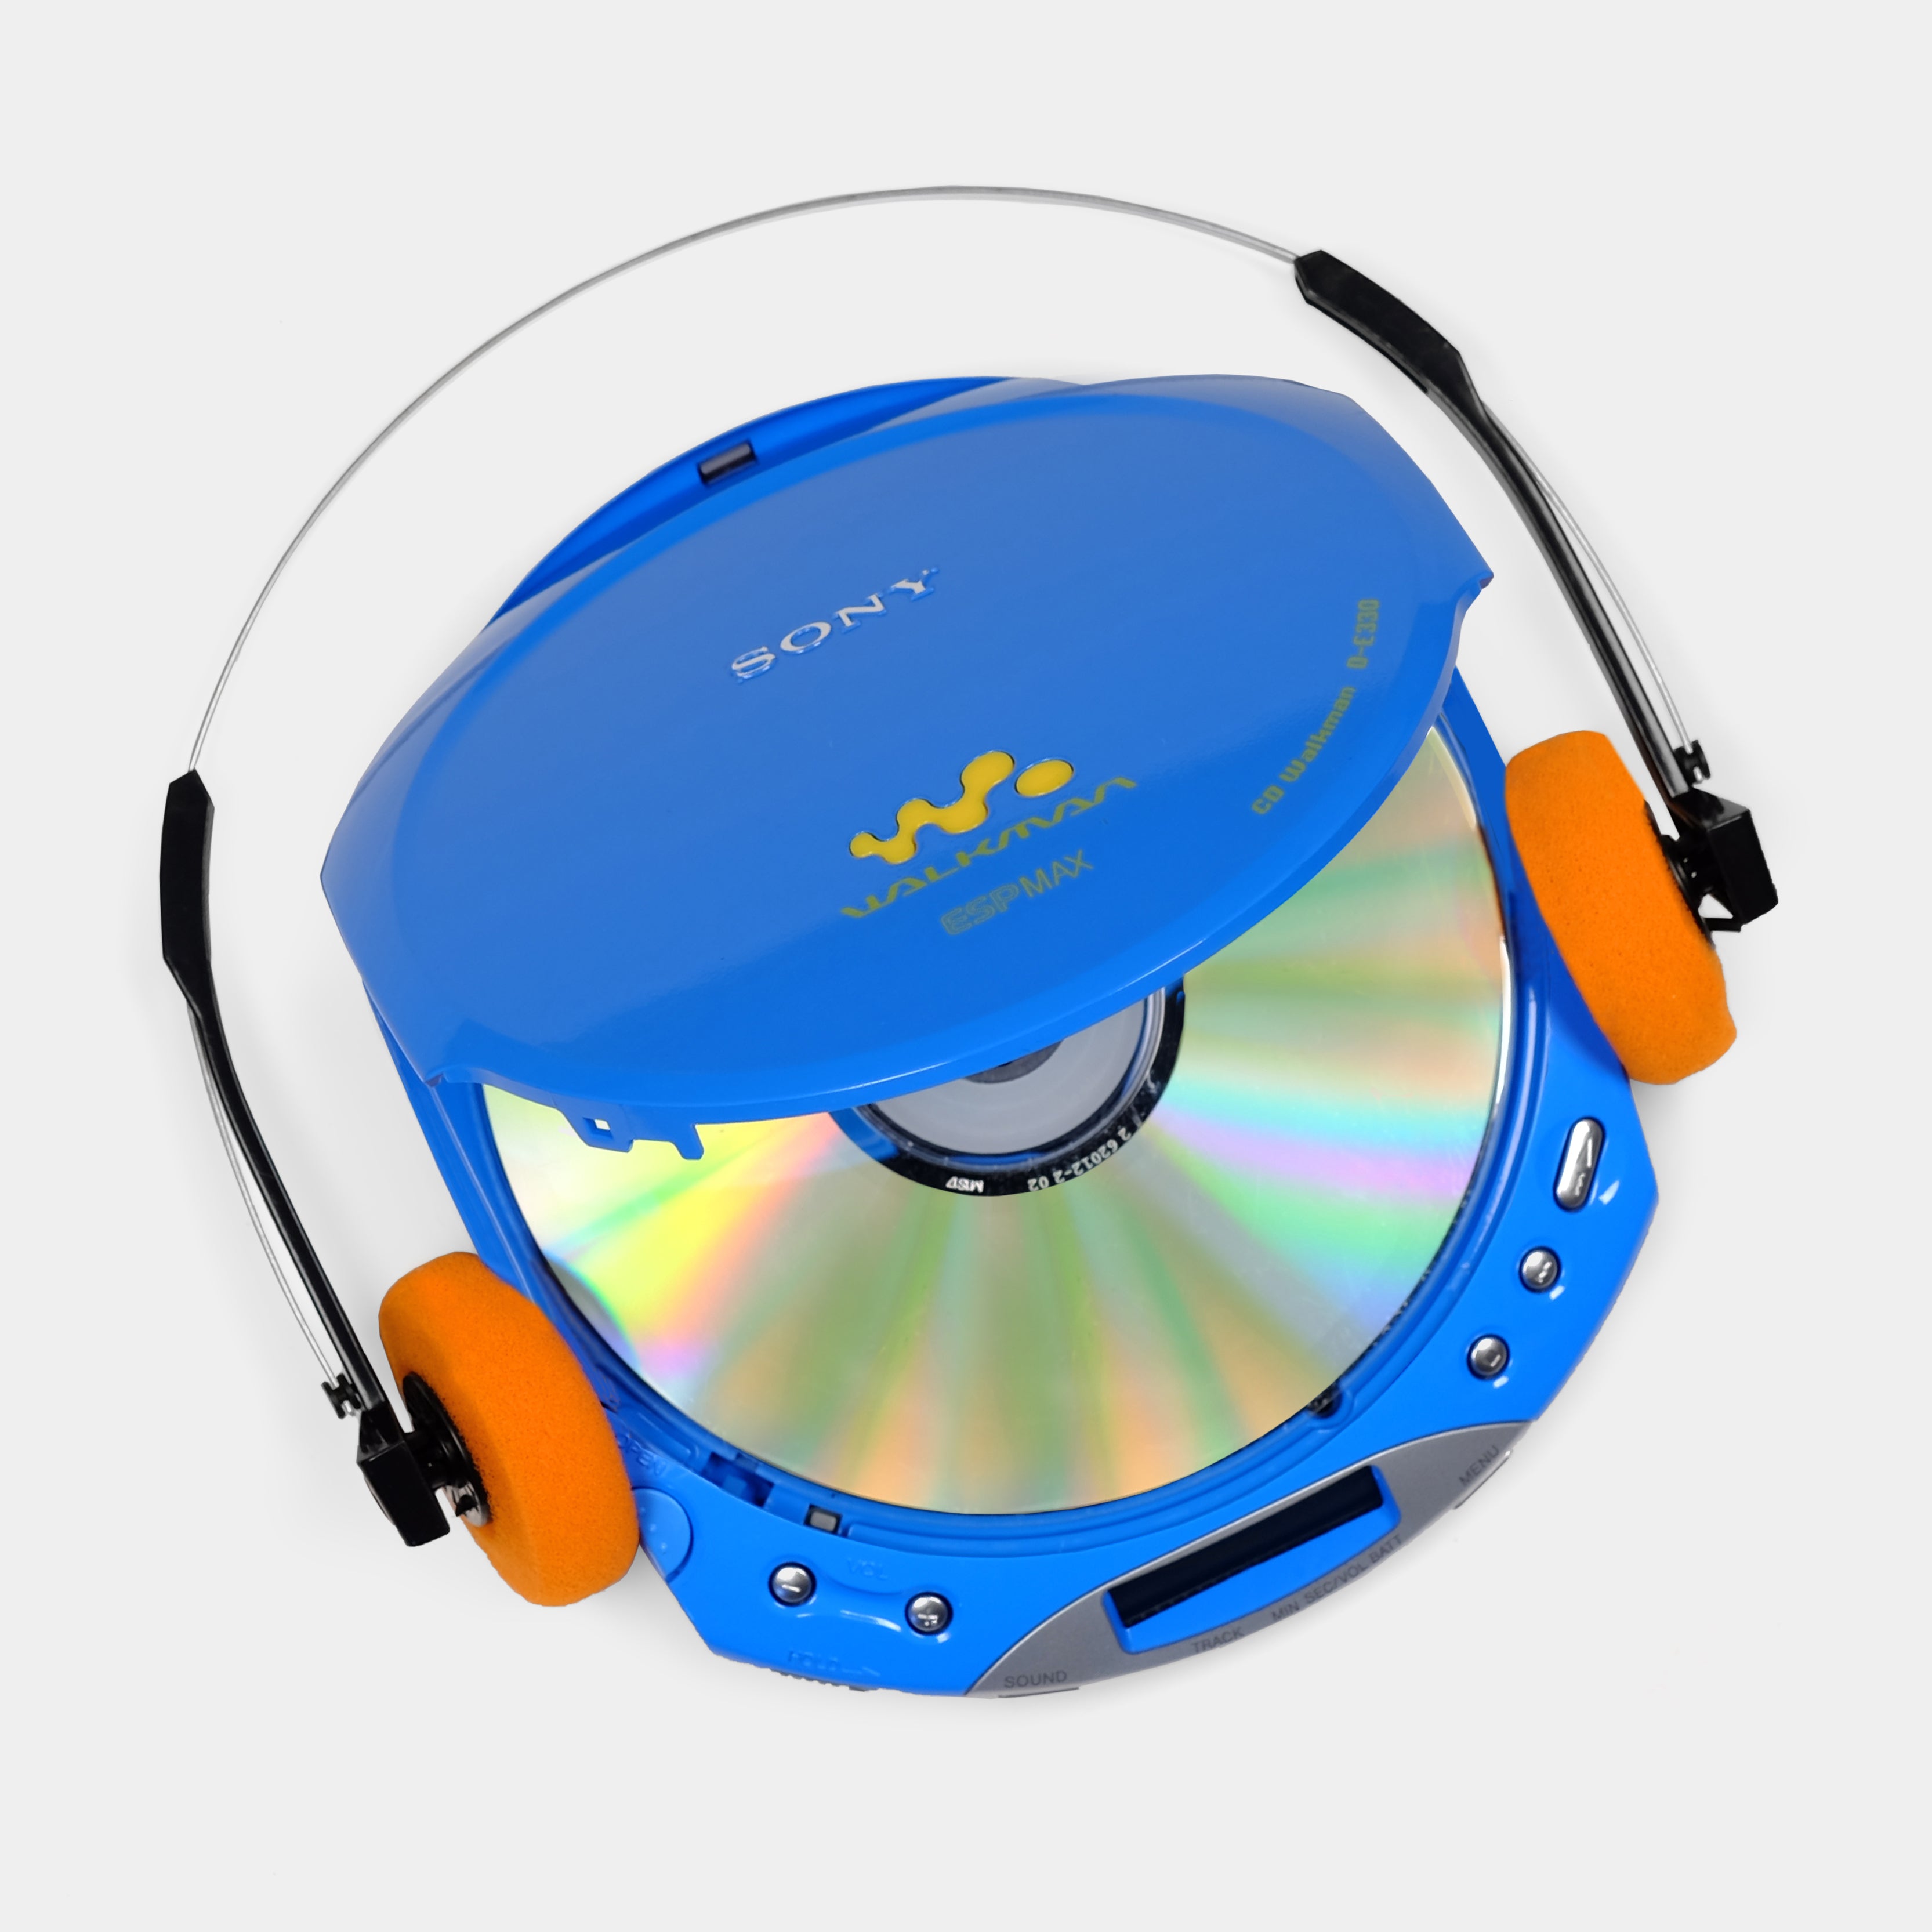 Sony Walkman D-E330 Blue Portable CD Player